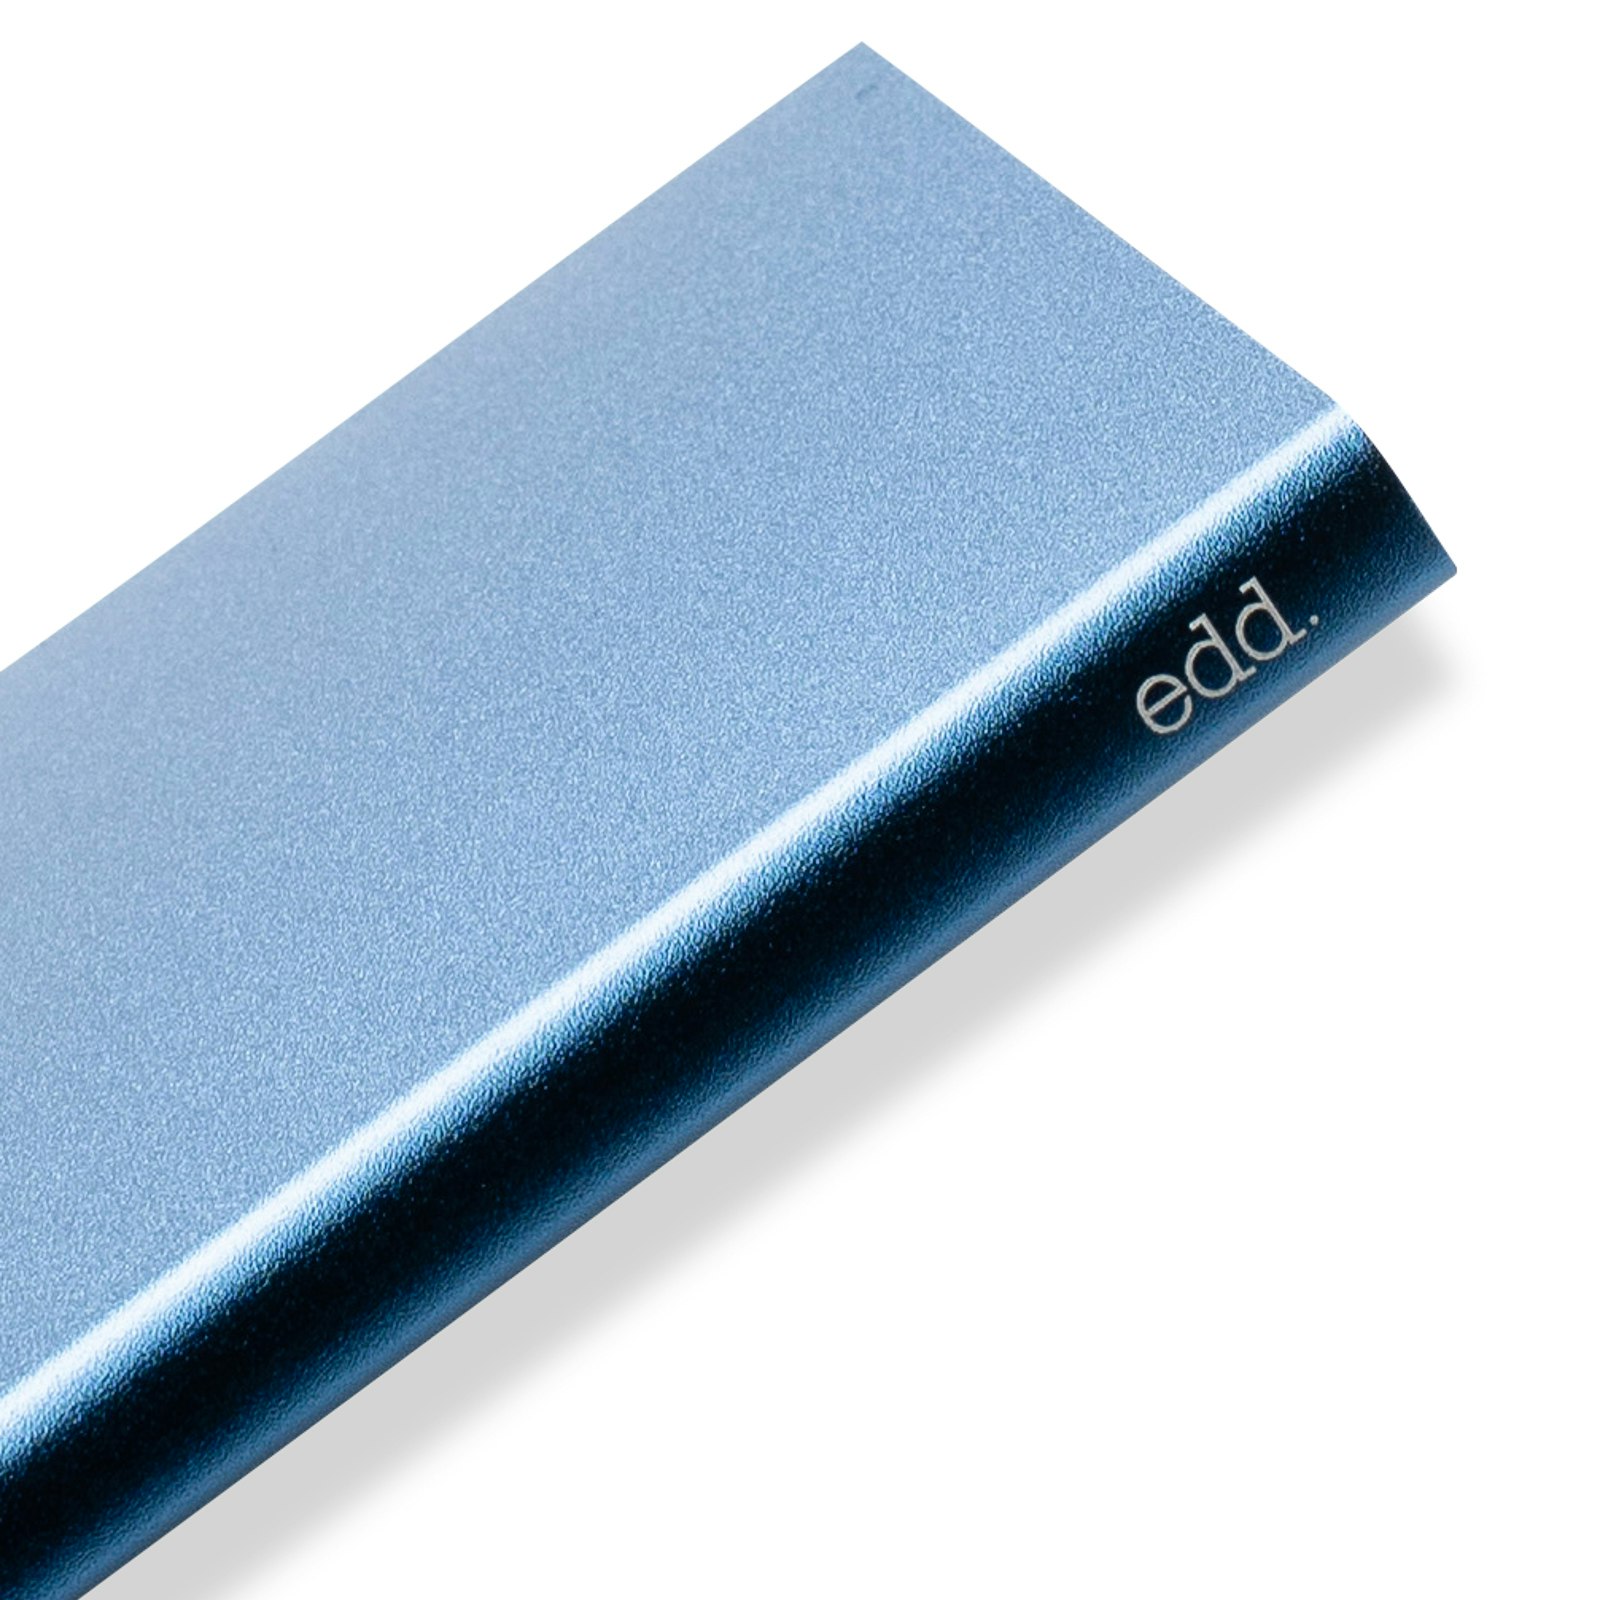 Single Aluminum Card Holder Blue